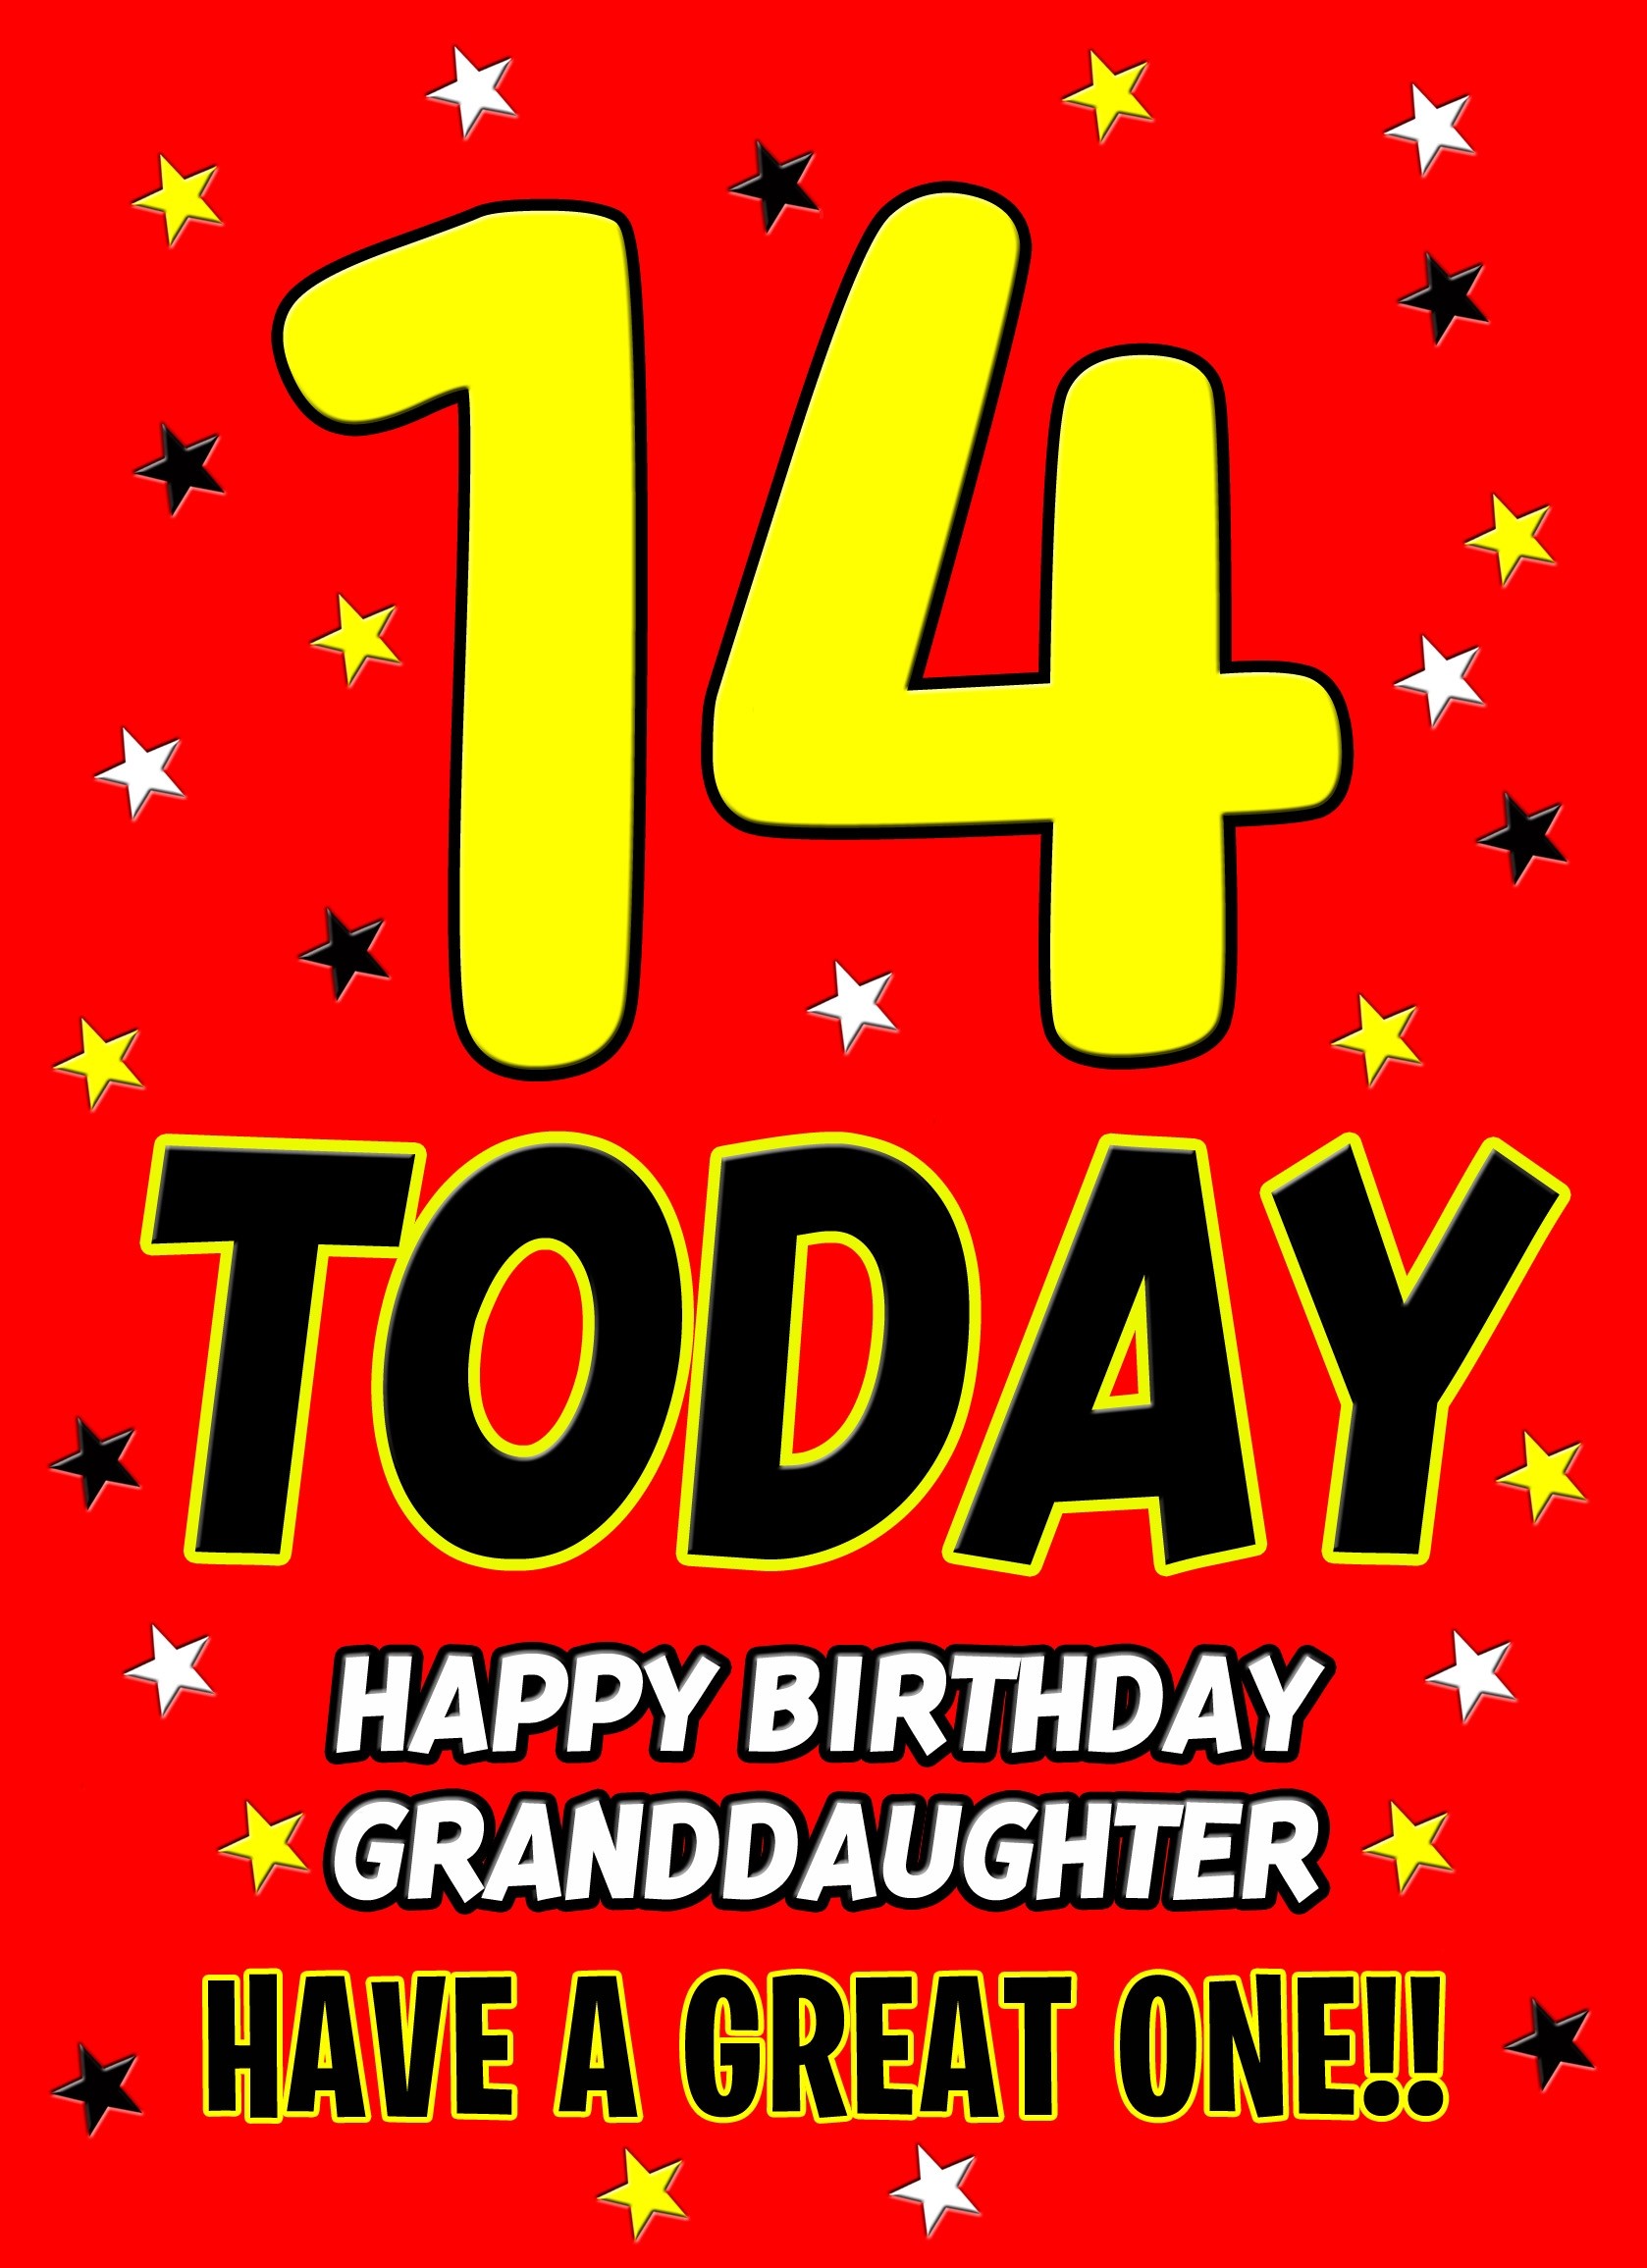 14 Today Birthday Card (Granddaughter)